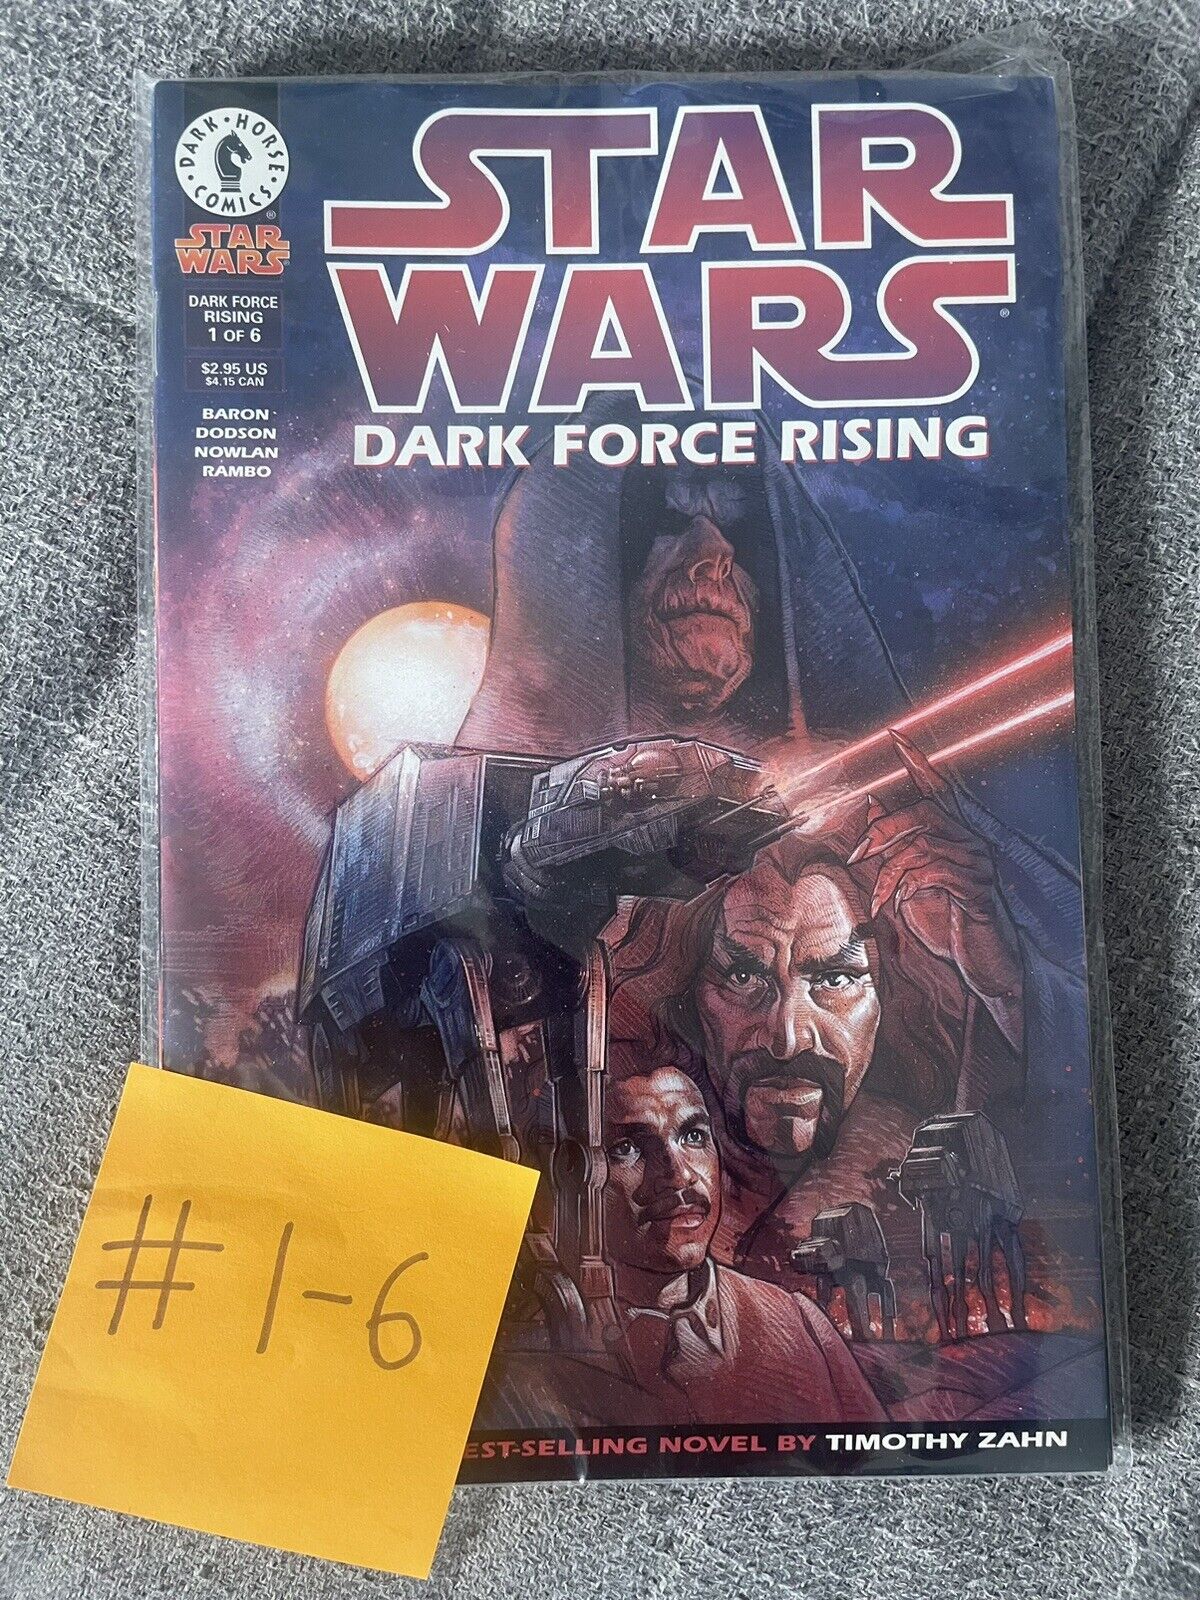 Star Wars Dark Force Rising #1 2 3 4 5 6 Complete Set 1-6 / Comic Run THRAWN